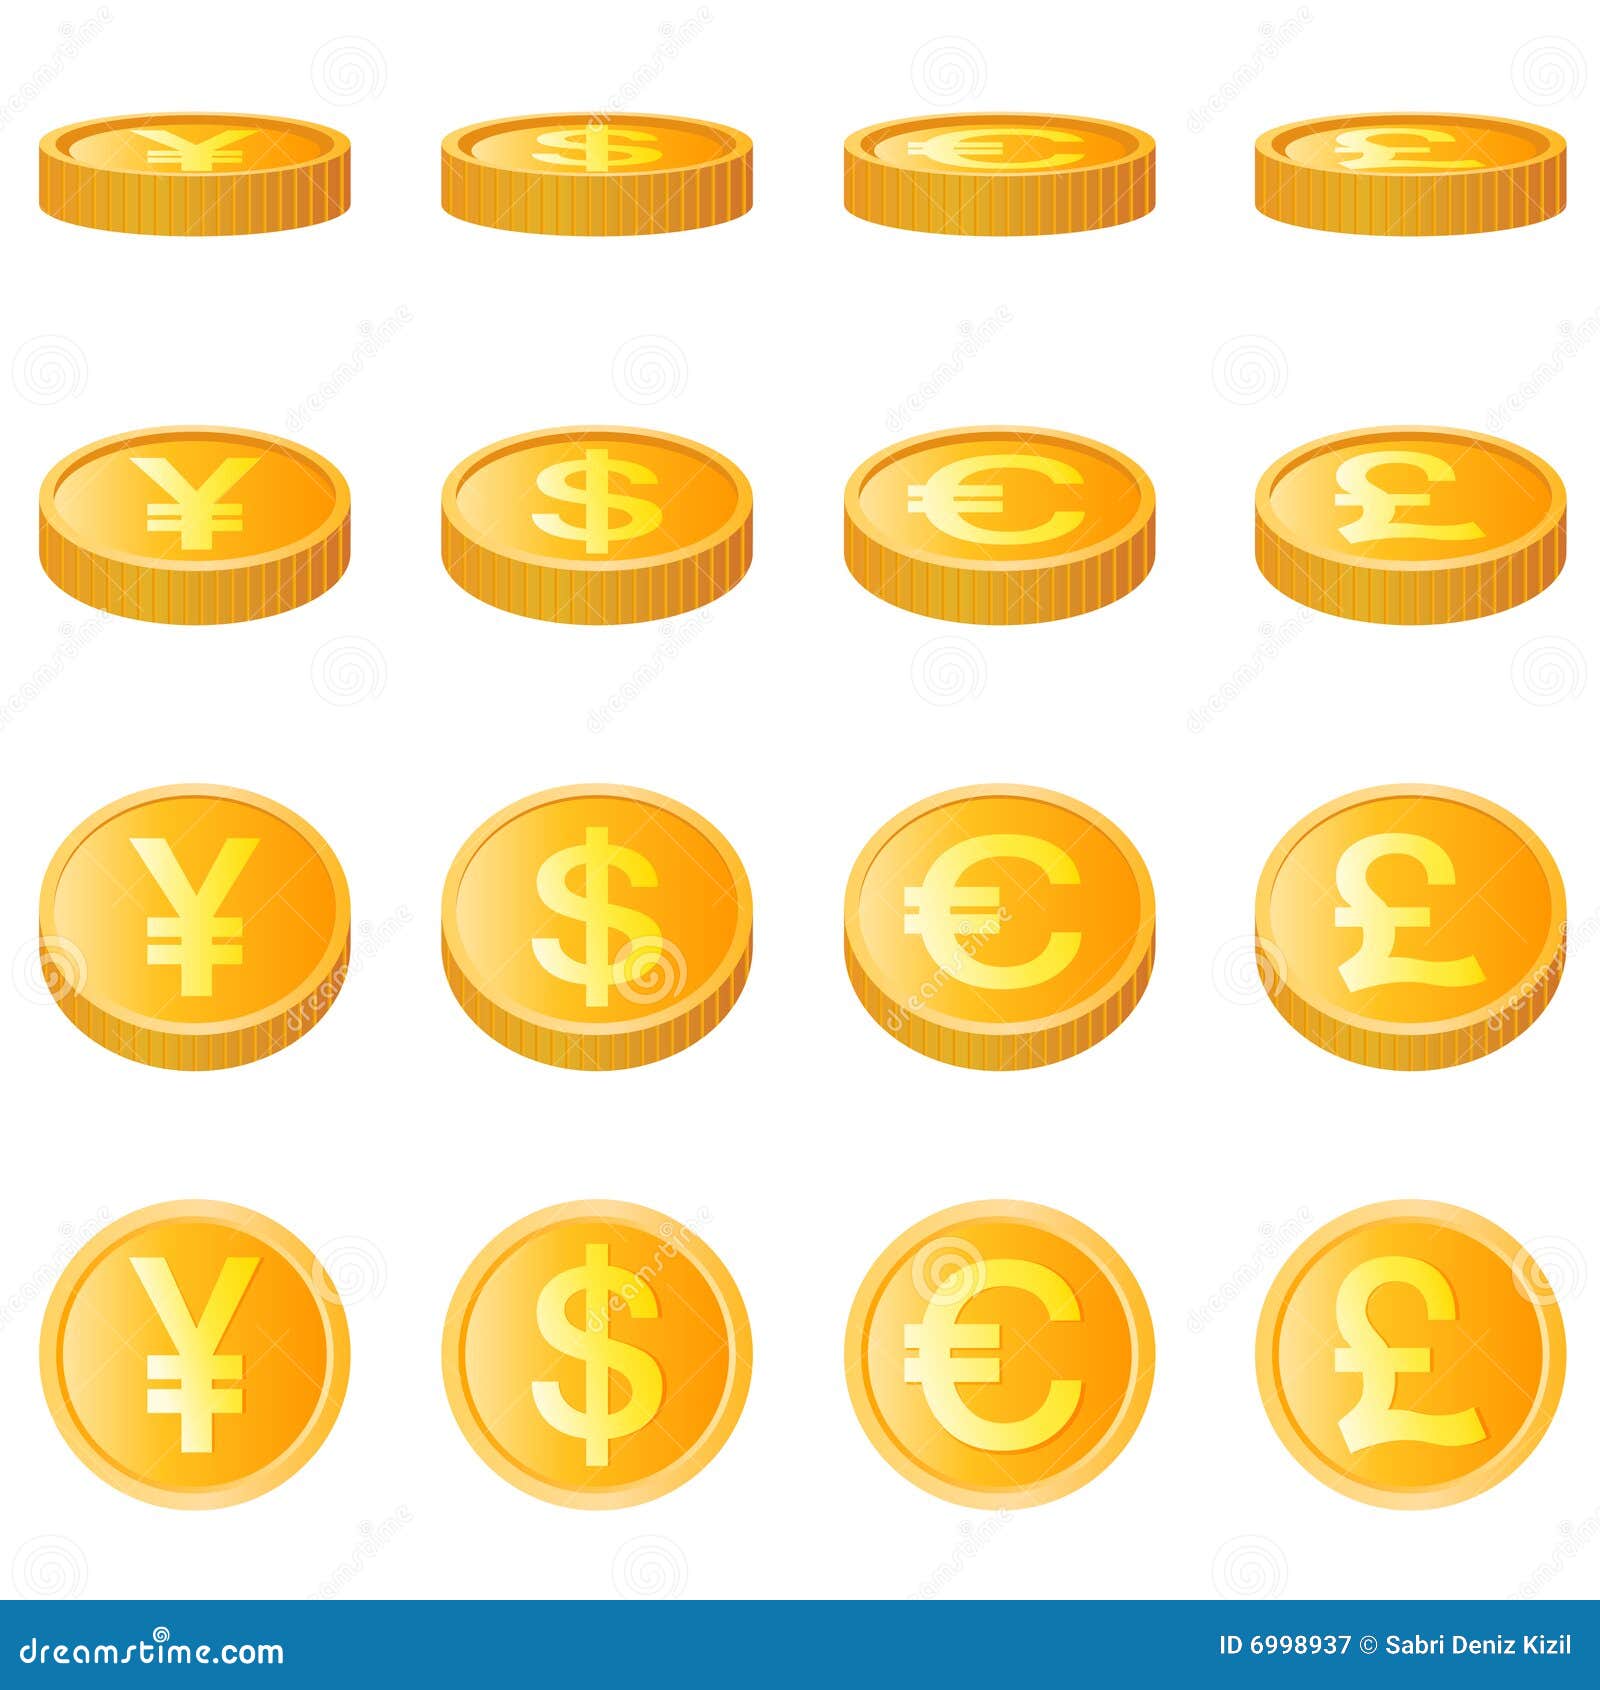 gold coin, four monetary unit 